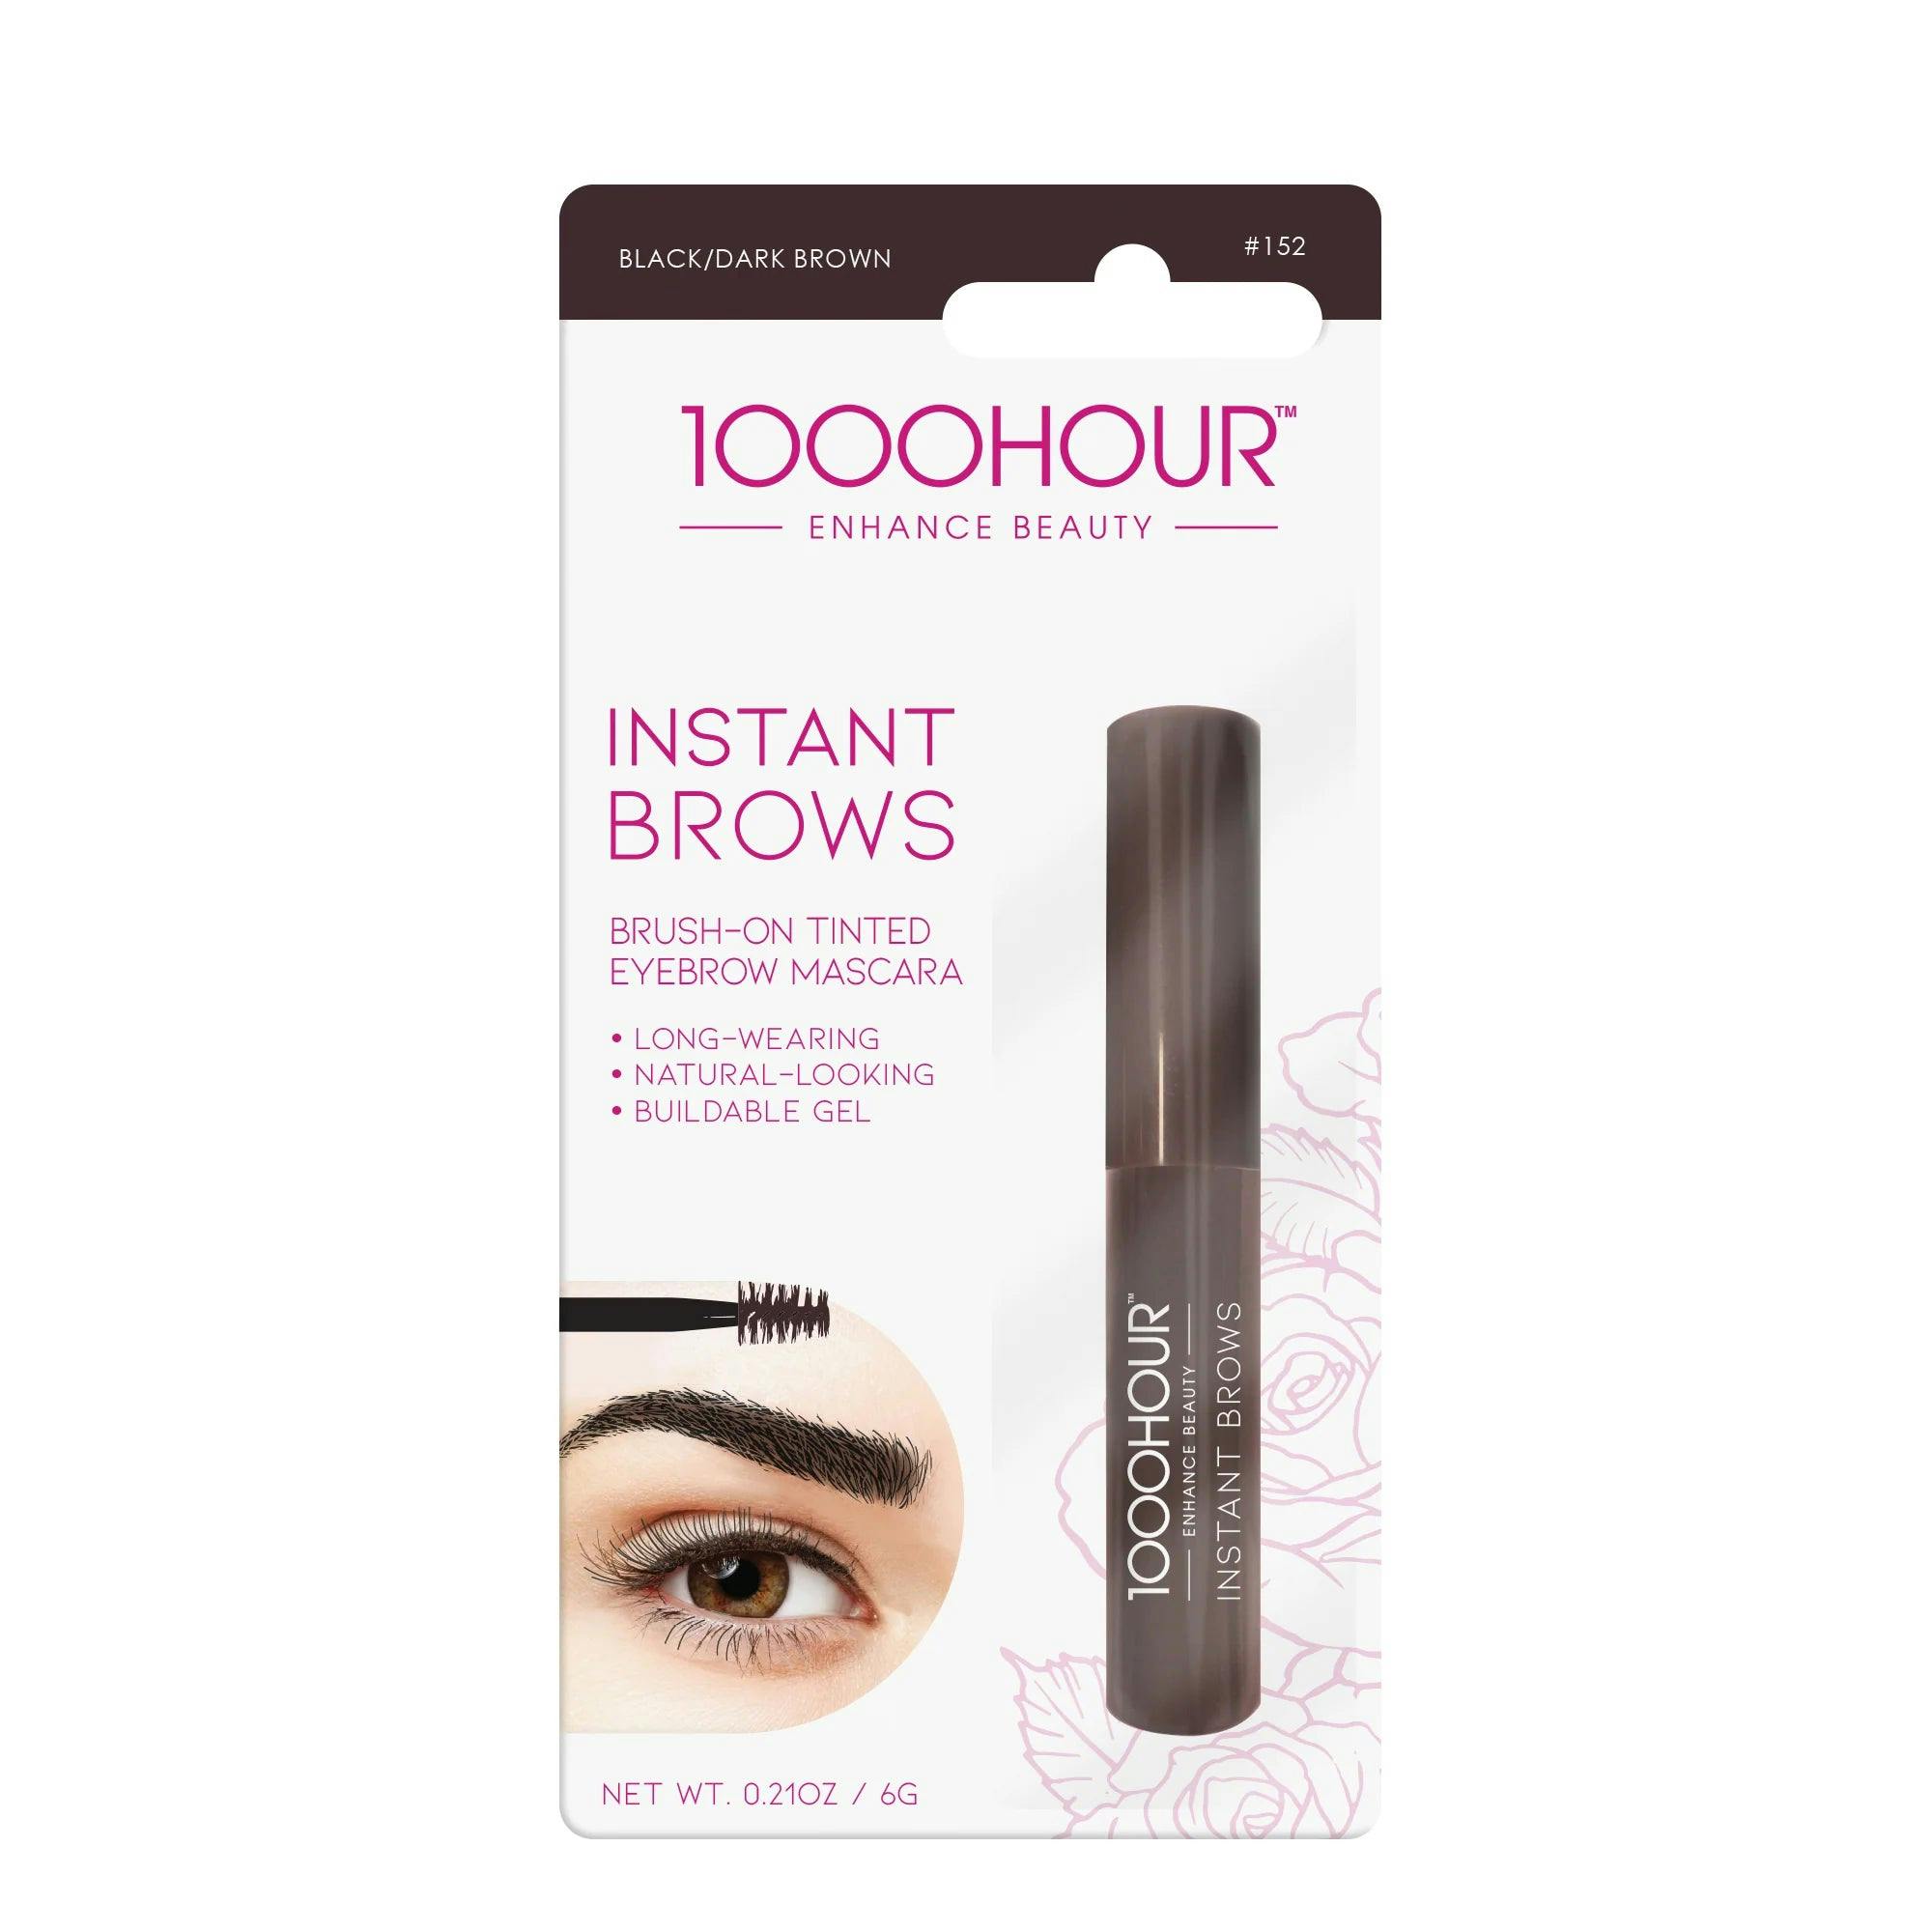 1000 Hour Instant Brows Mascara - Black/Dark Brown